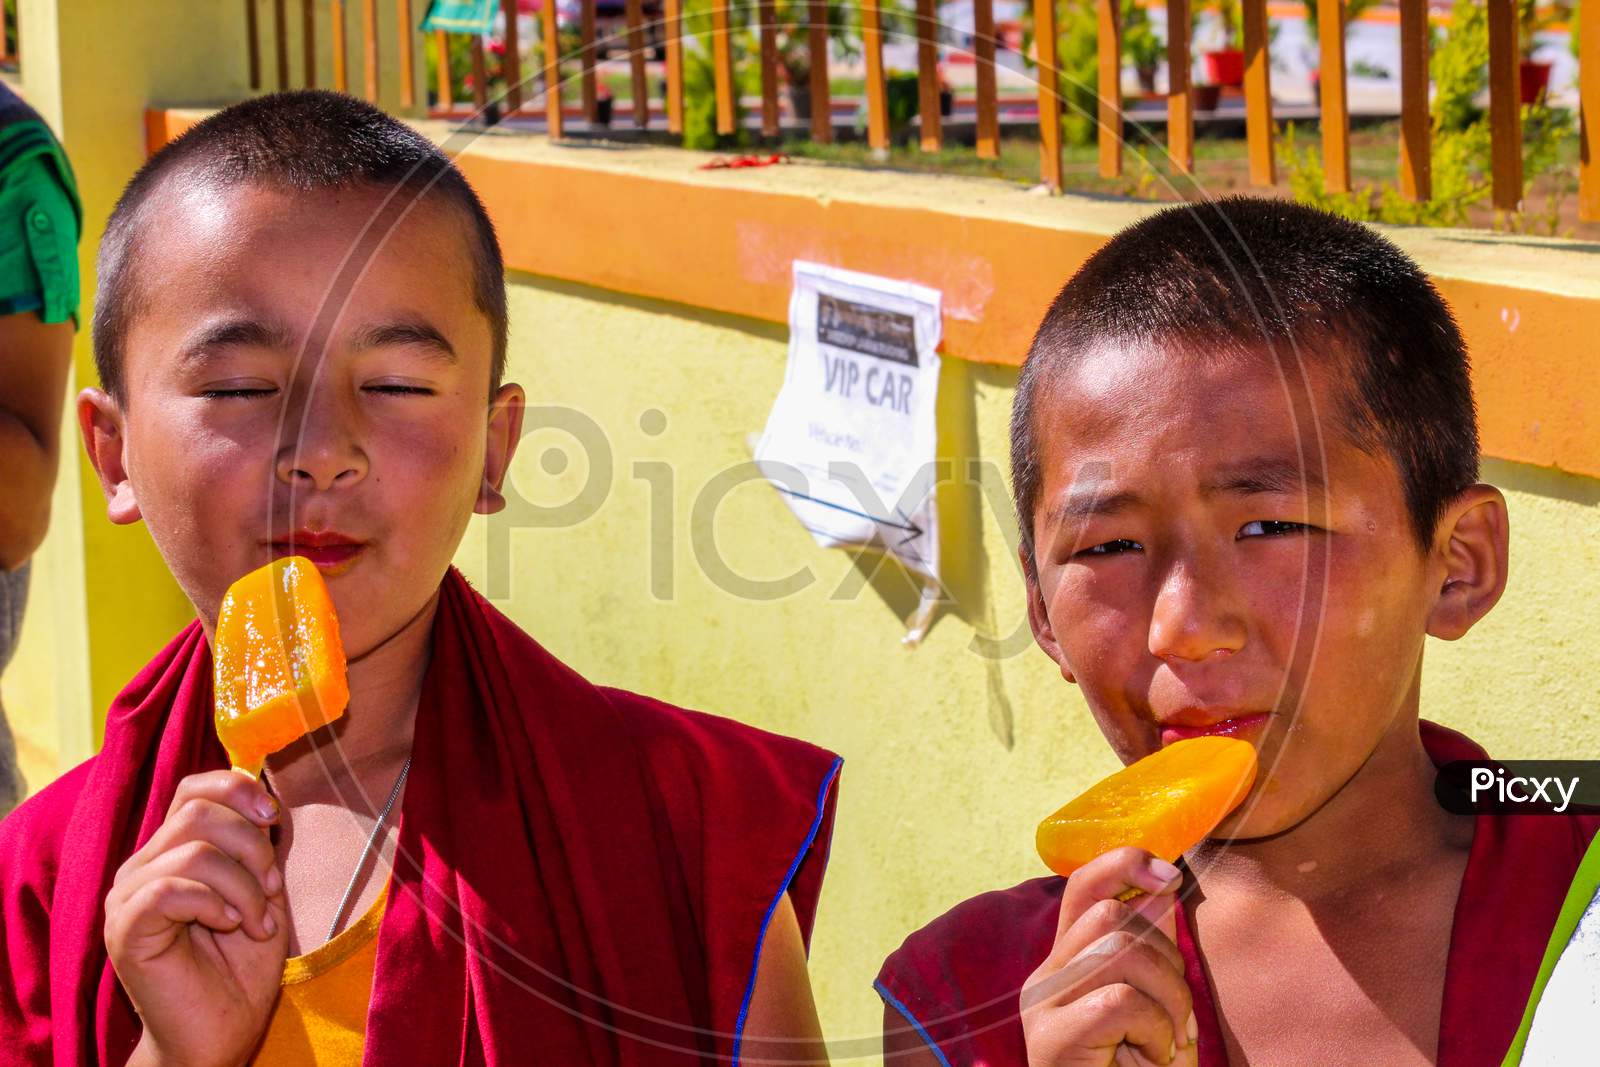 Two Tibetan Kids  relishing Ice candies in Bylukoppa town of Coorg district in Karnataka/India.